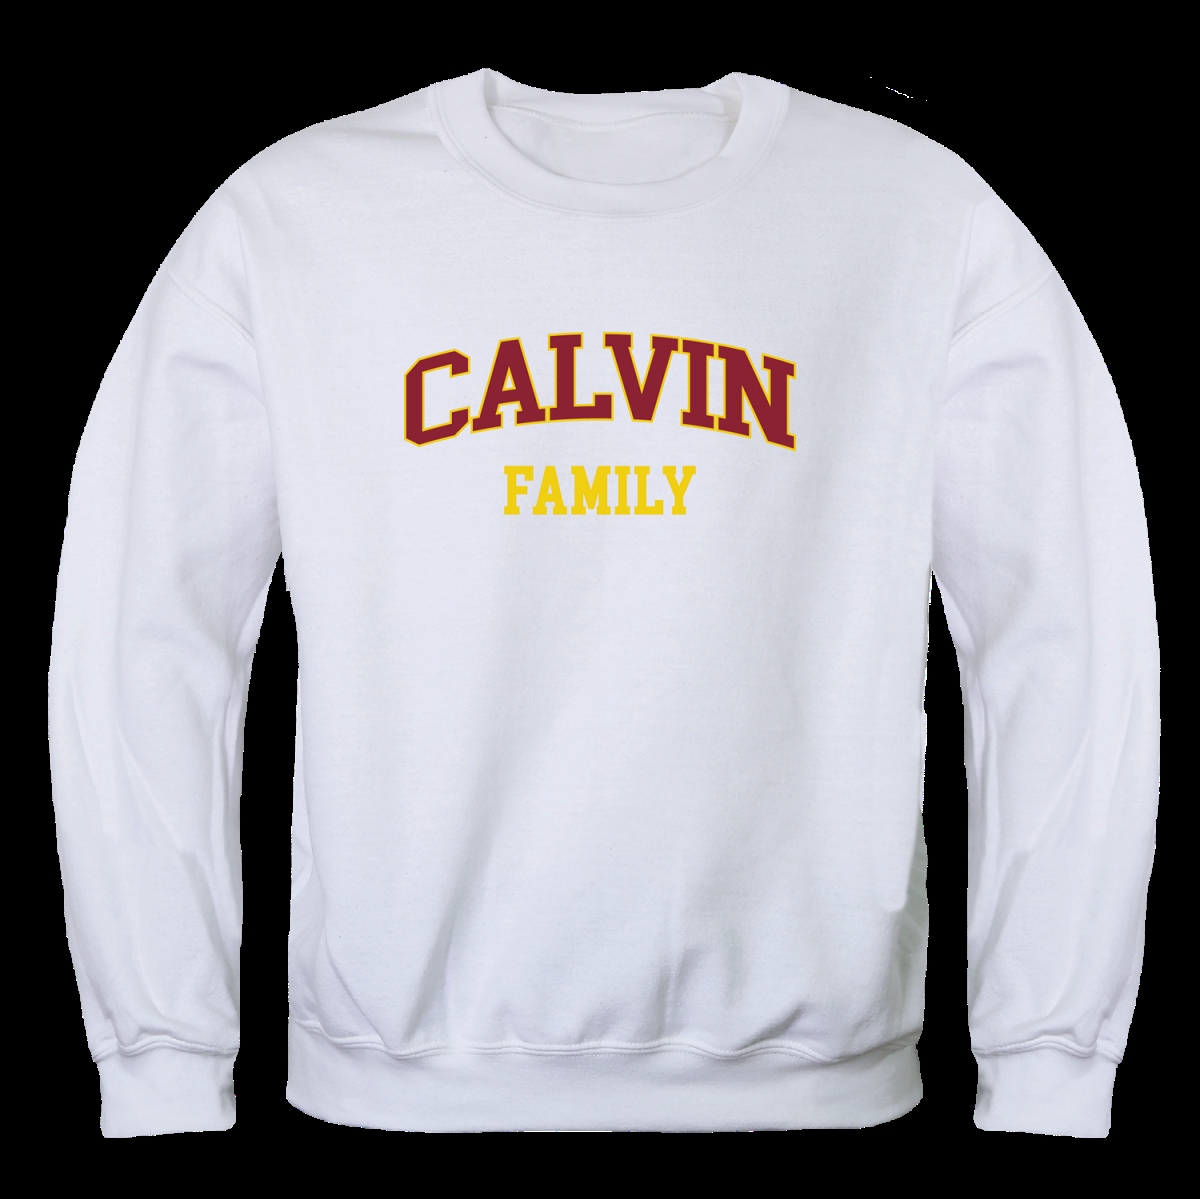 W Republic 572-507-WHT-04 Calvin University Knights Family Crewneck Sweatshirt&#44; White - Extra Large